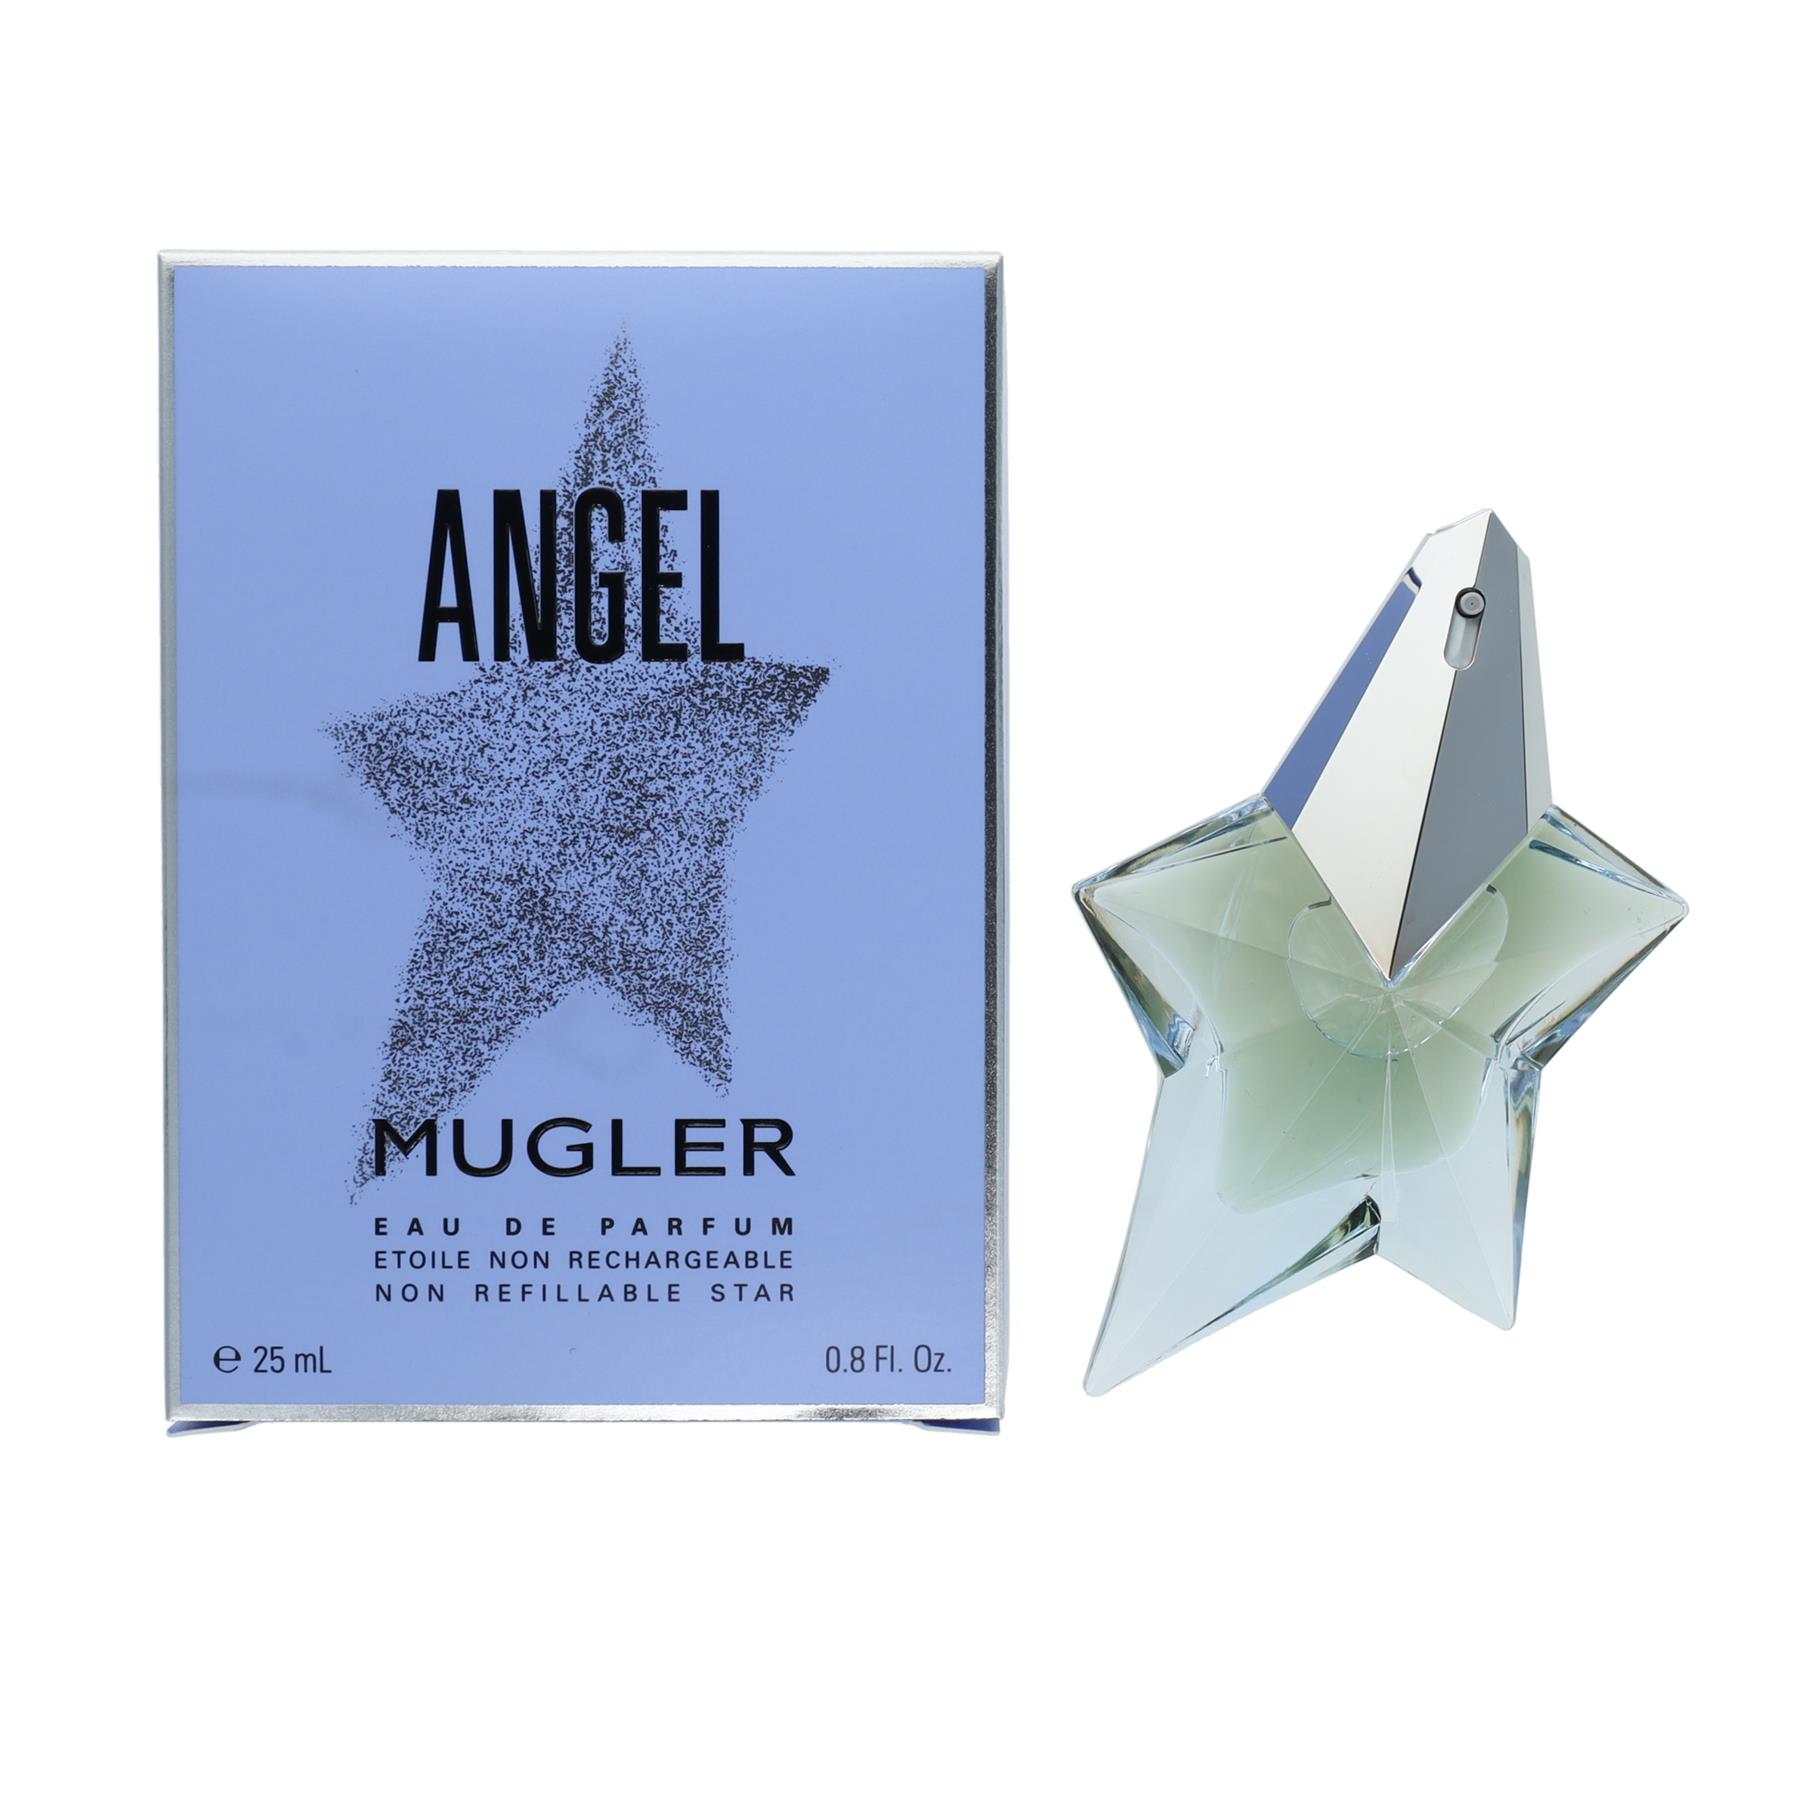 Thierry Mugler Angel 25ml Eau de Parfum Spray for Her from Perfume Plus Direct